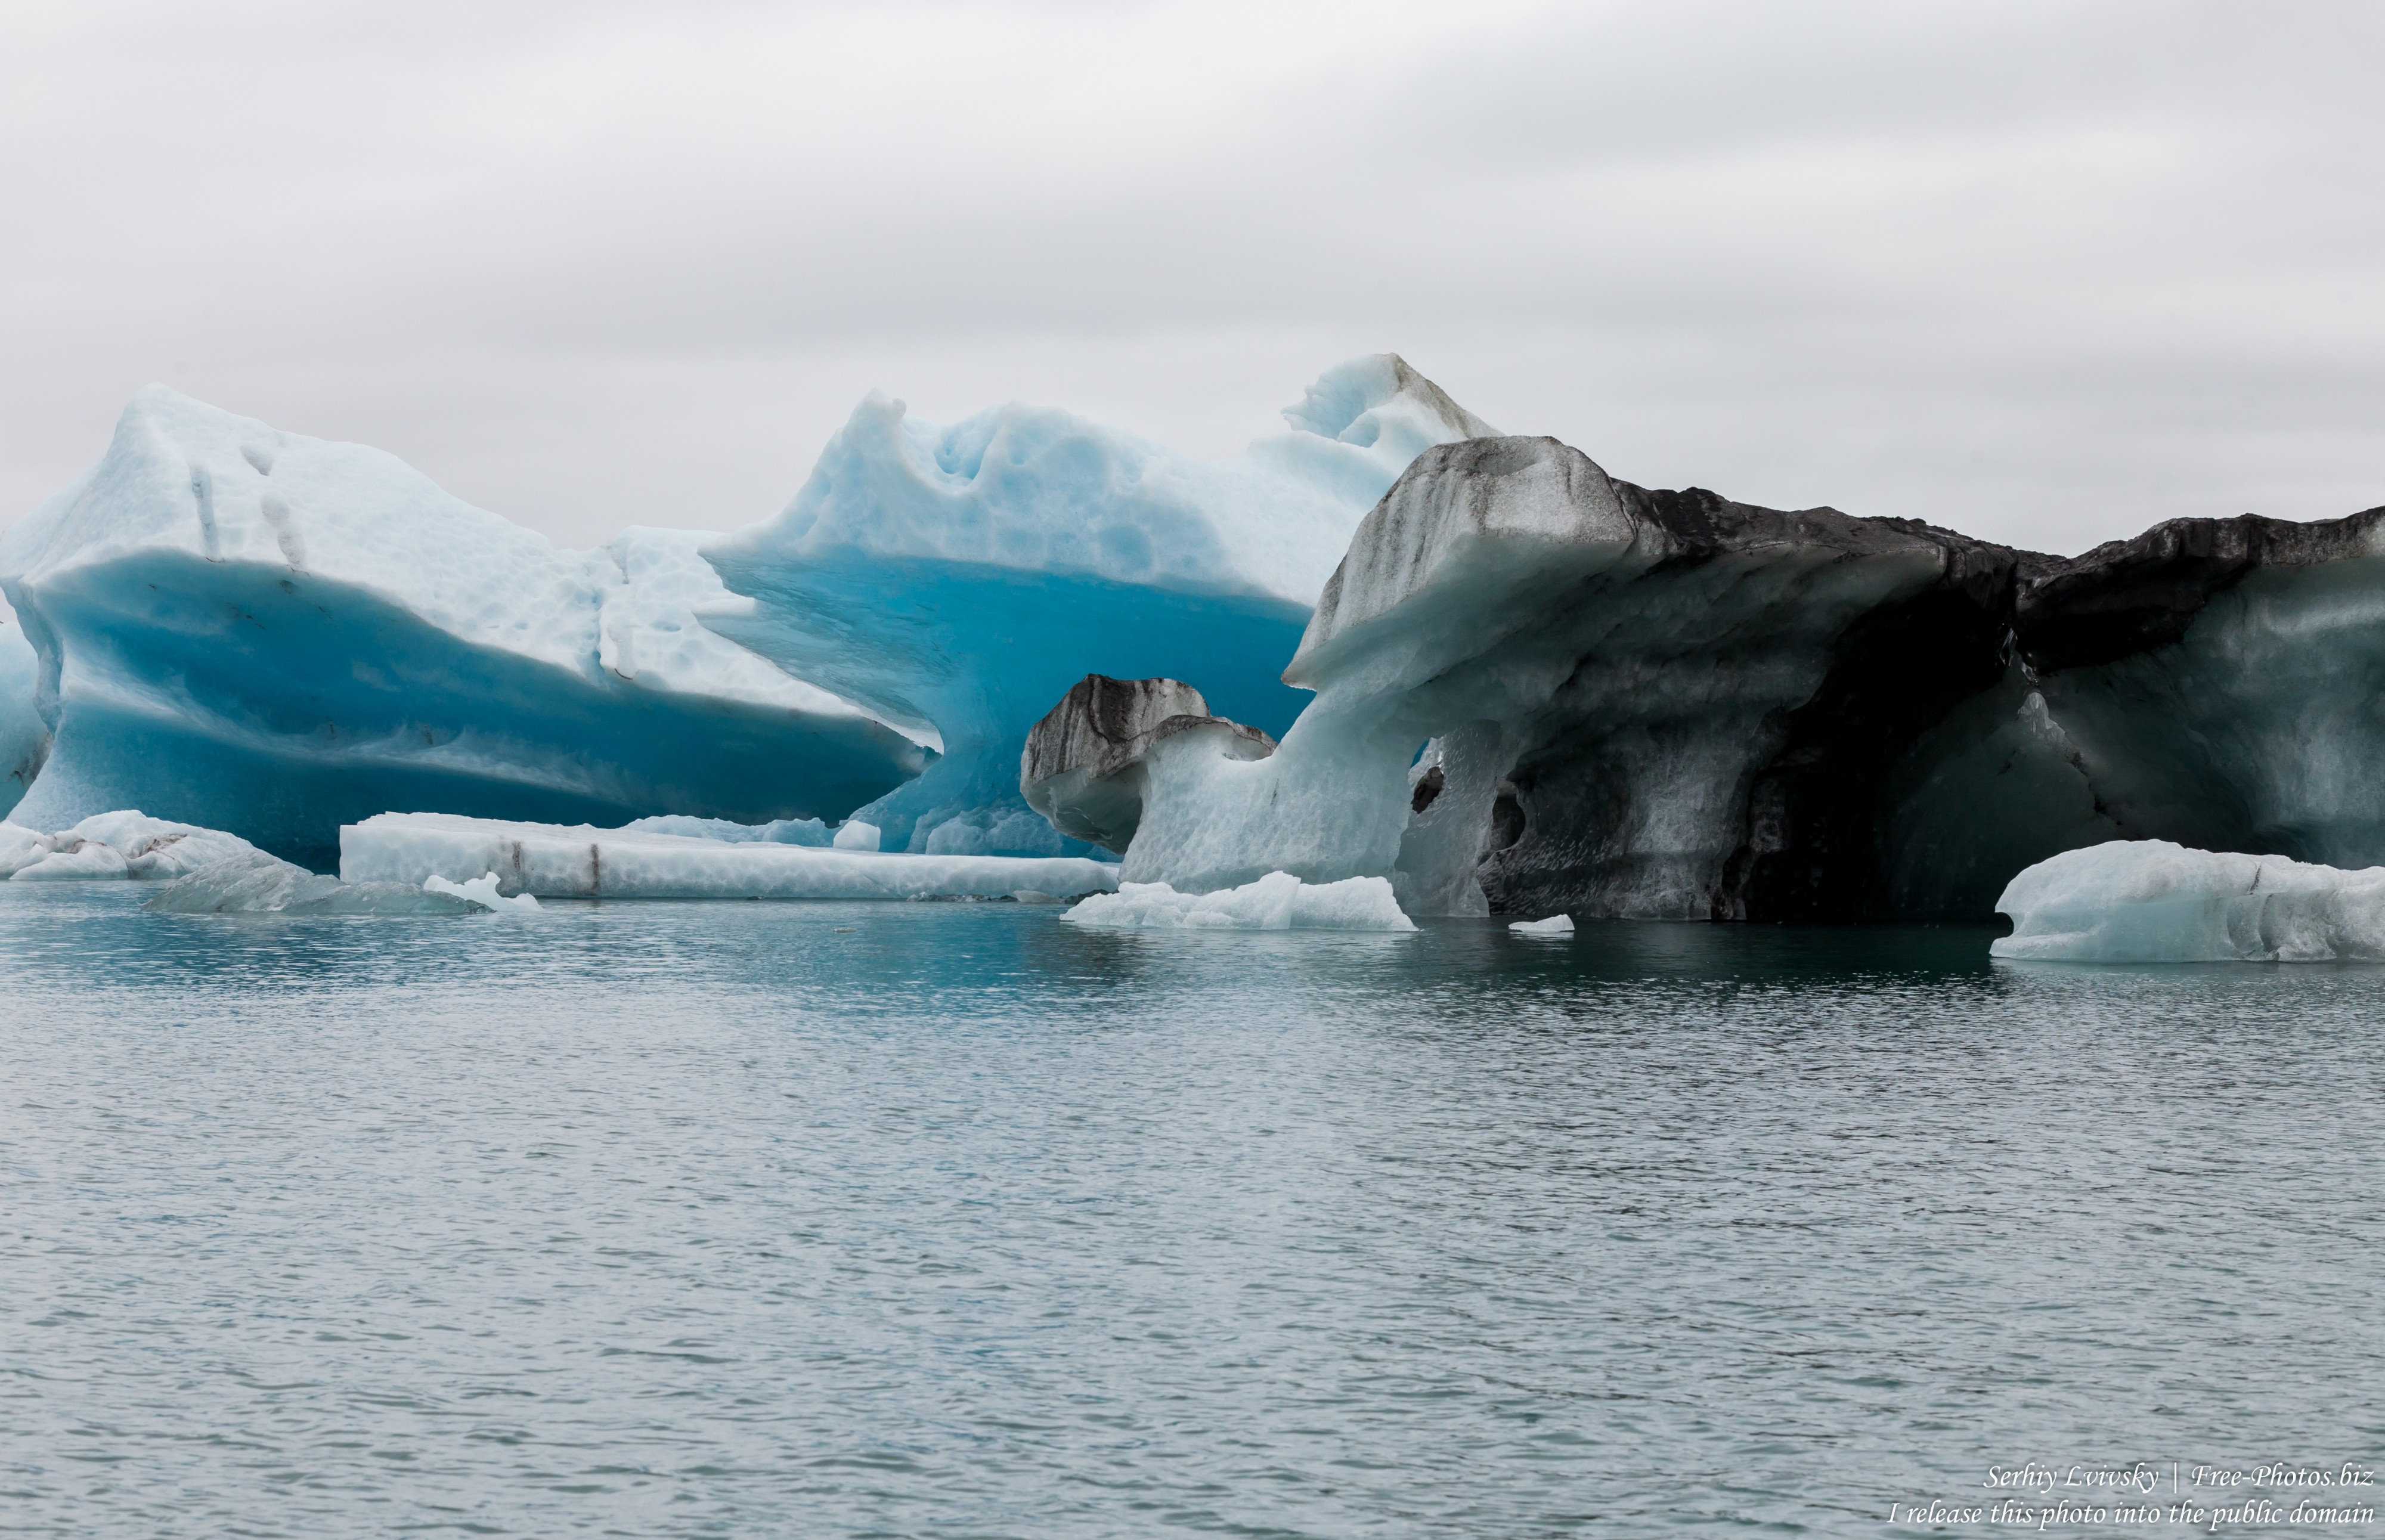 Jokulsarlon Glacier Lagoon, Iceland, photographed in May 2019 by Serhiy Lvivsky, photo 28